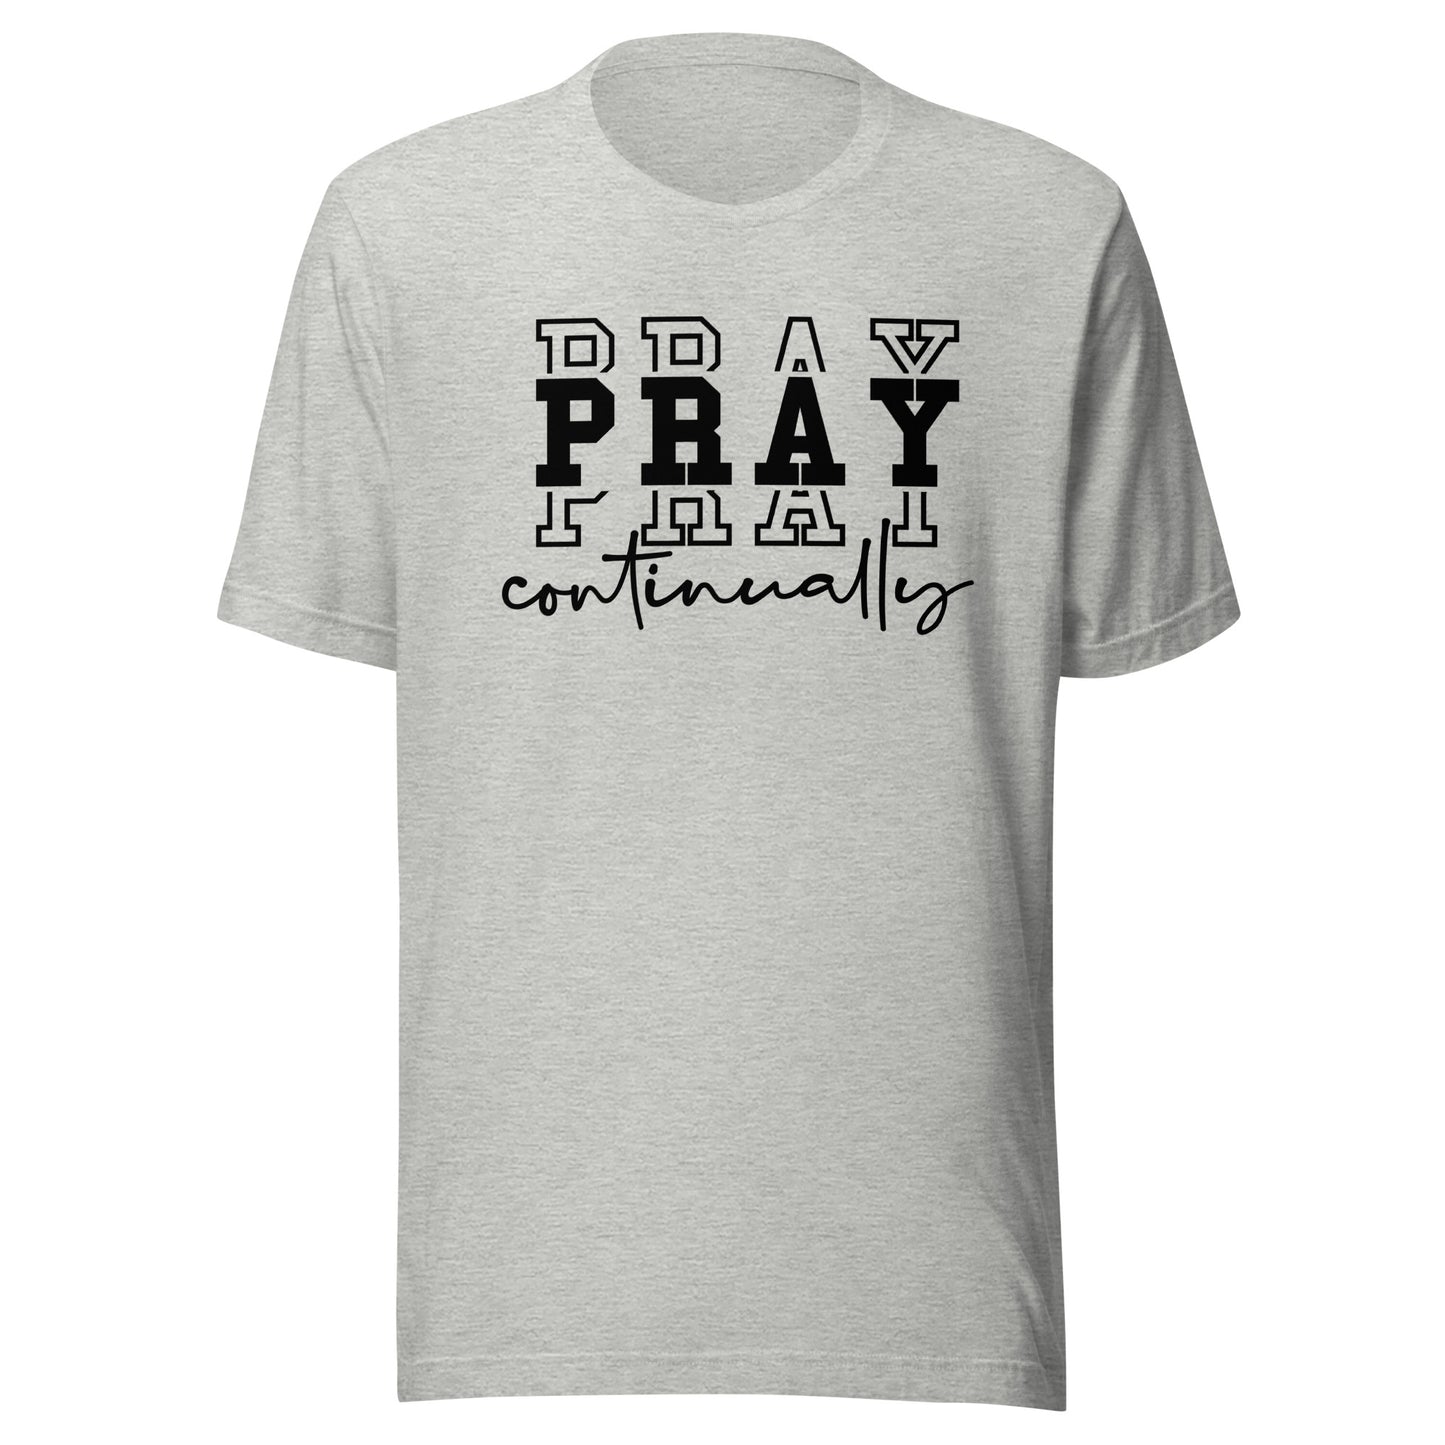 "Pray Continually" Unisex T-shirt.